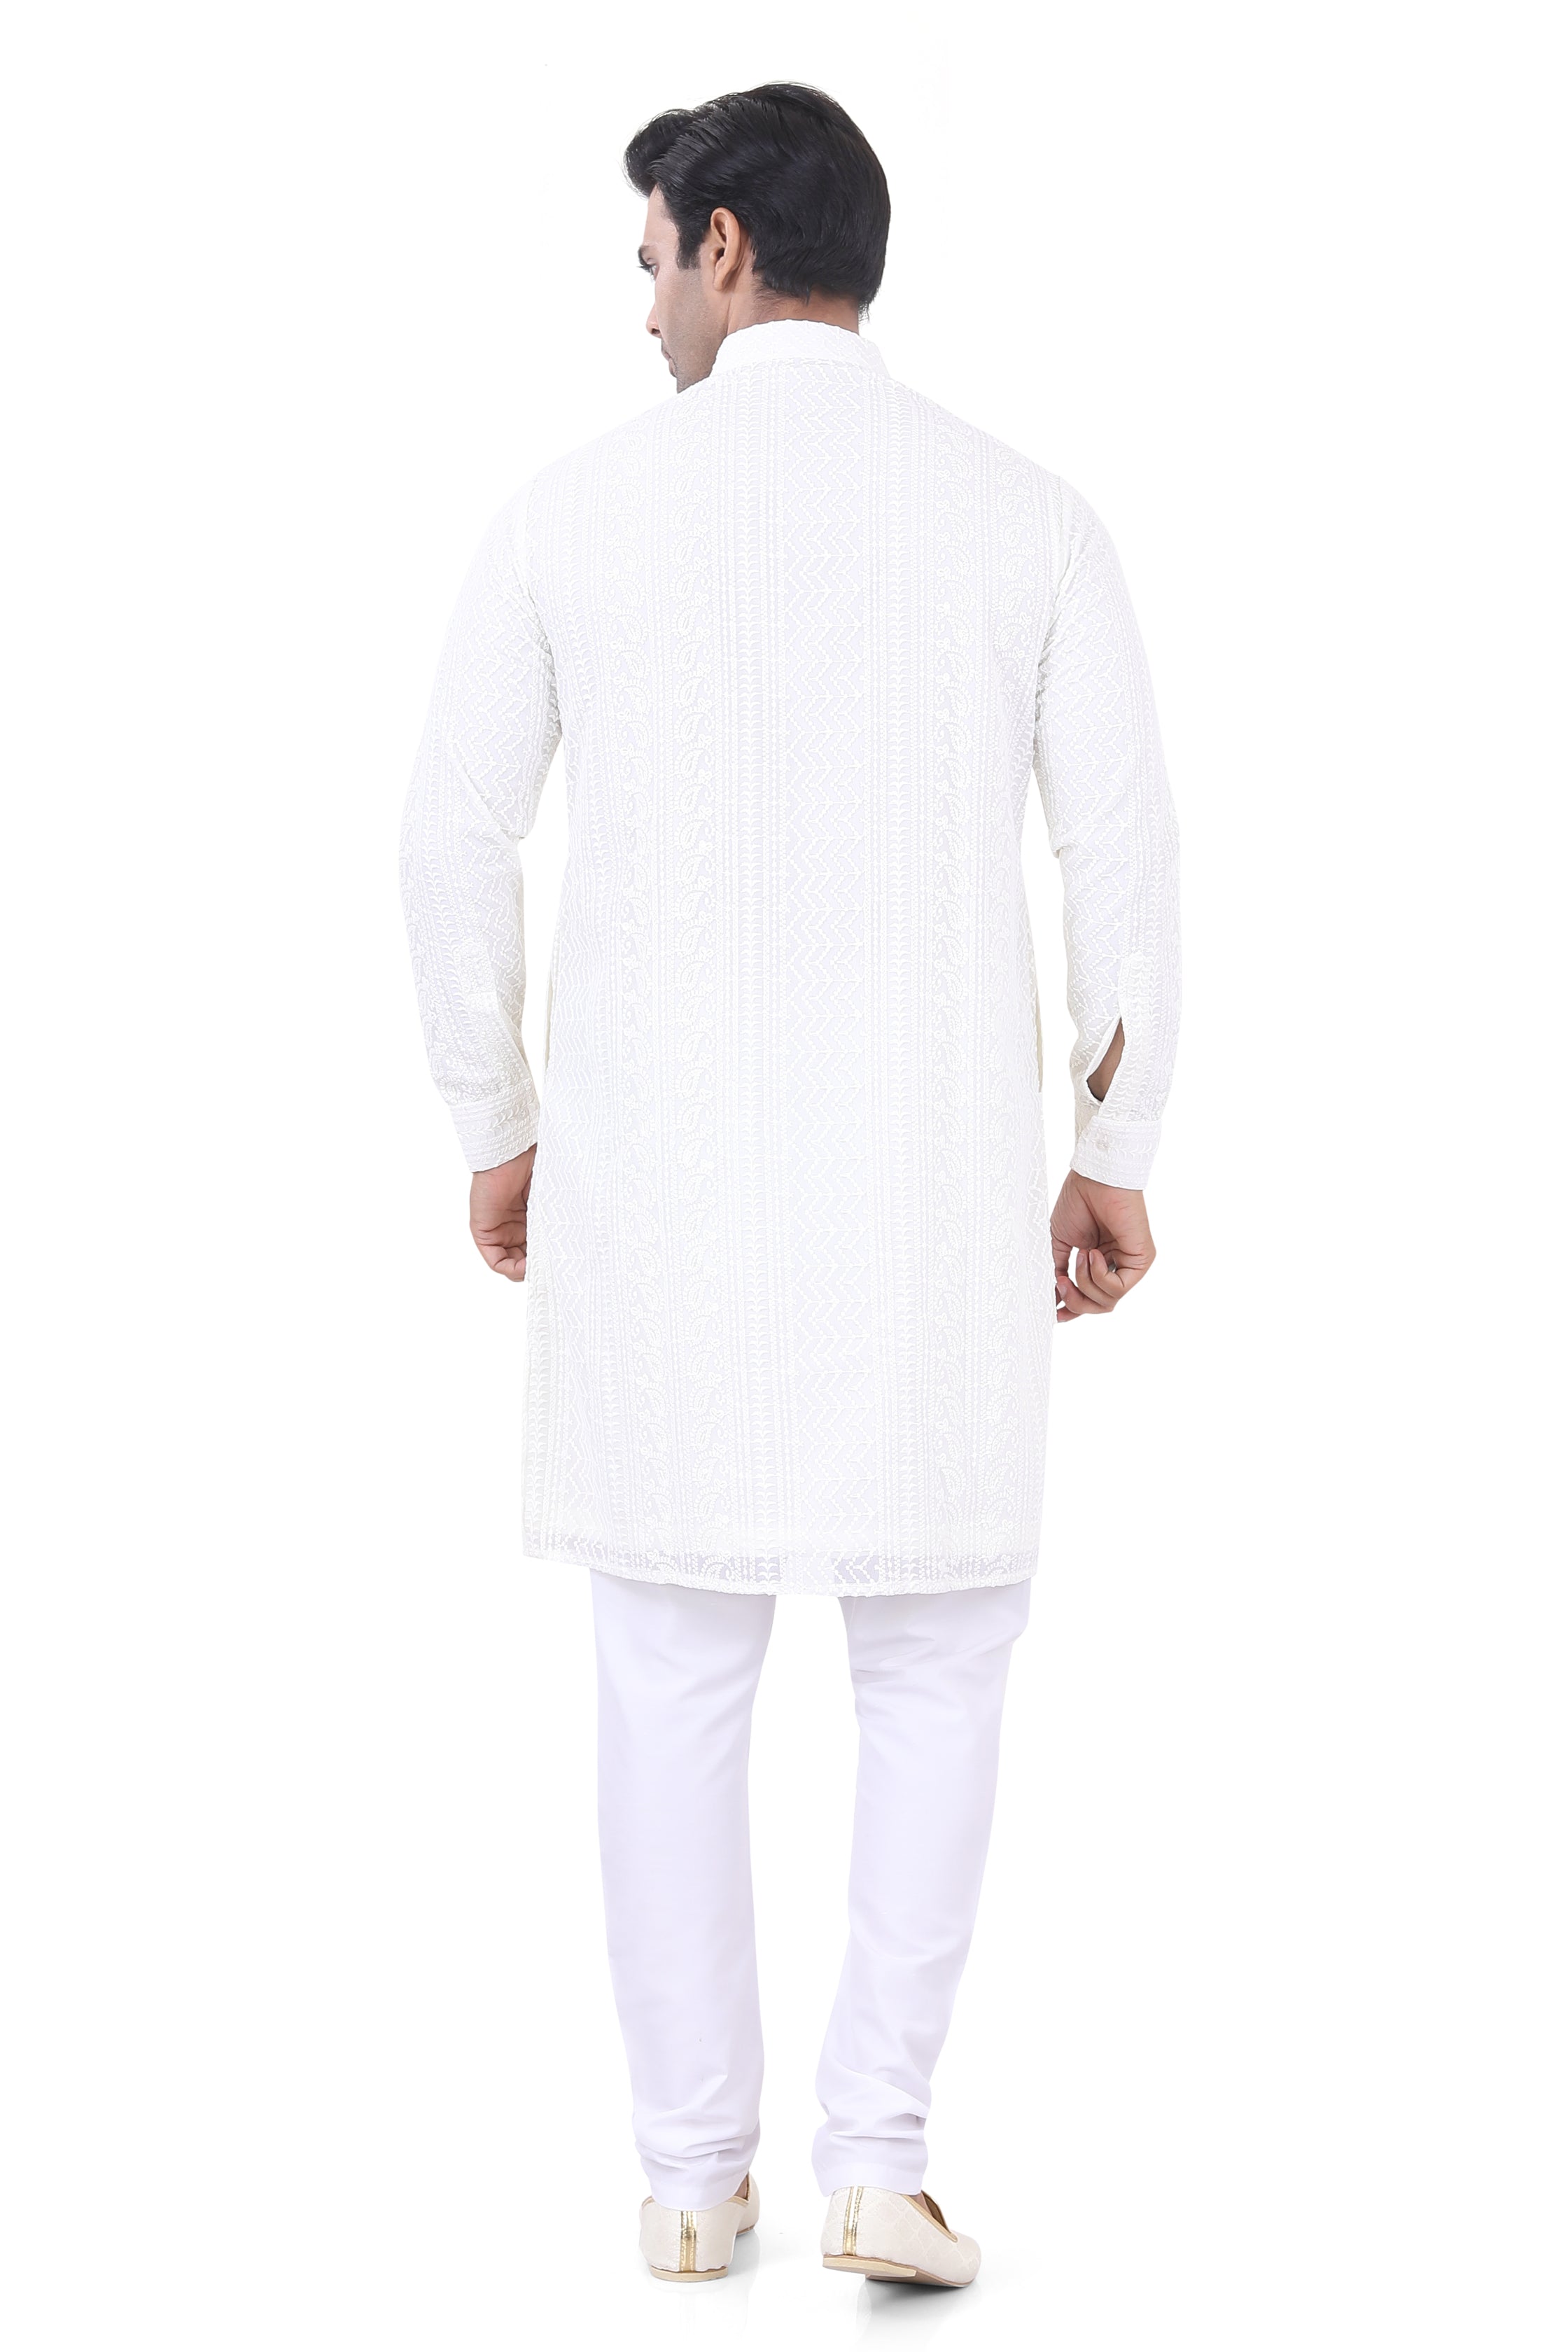 Lucknowi  Kurta Pajama Set in Off-White  - LCKP-009